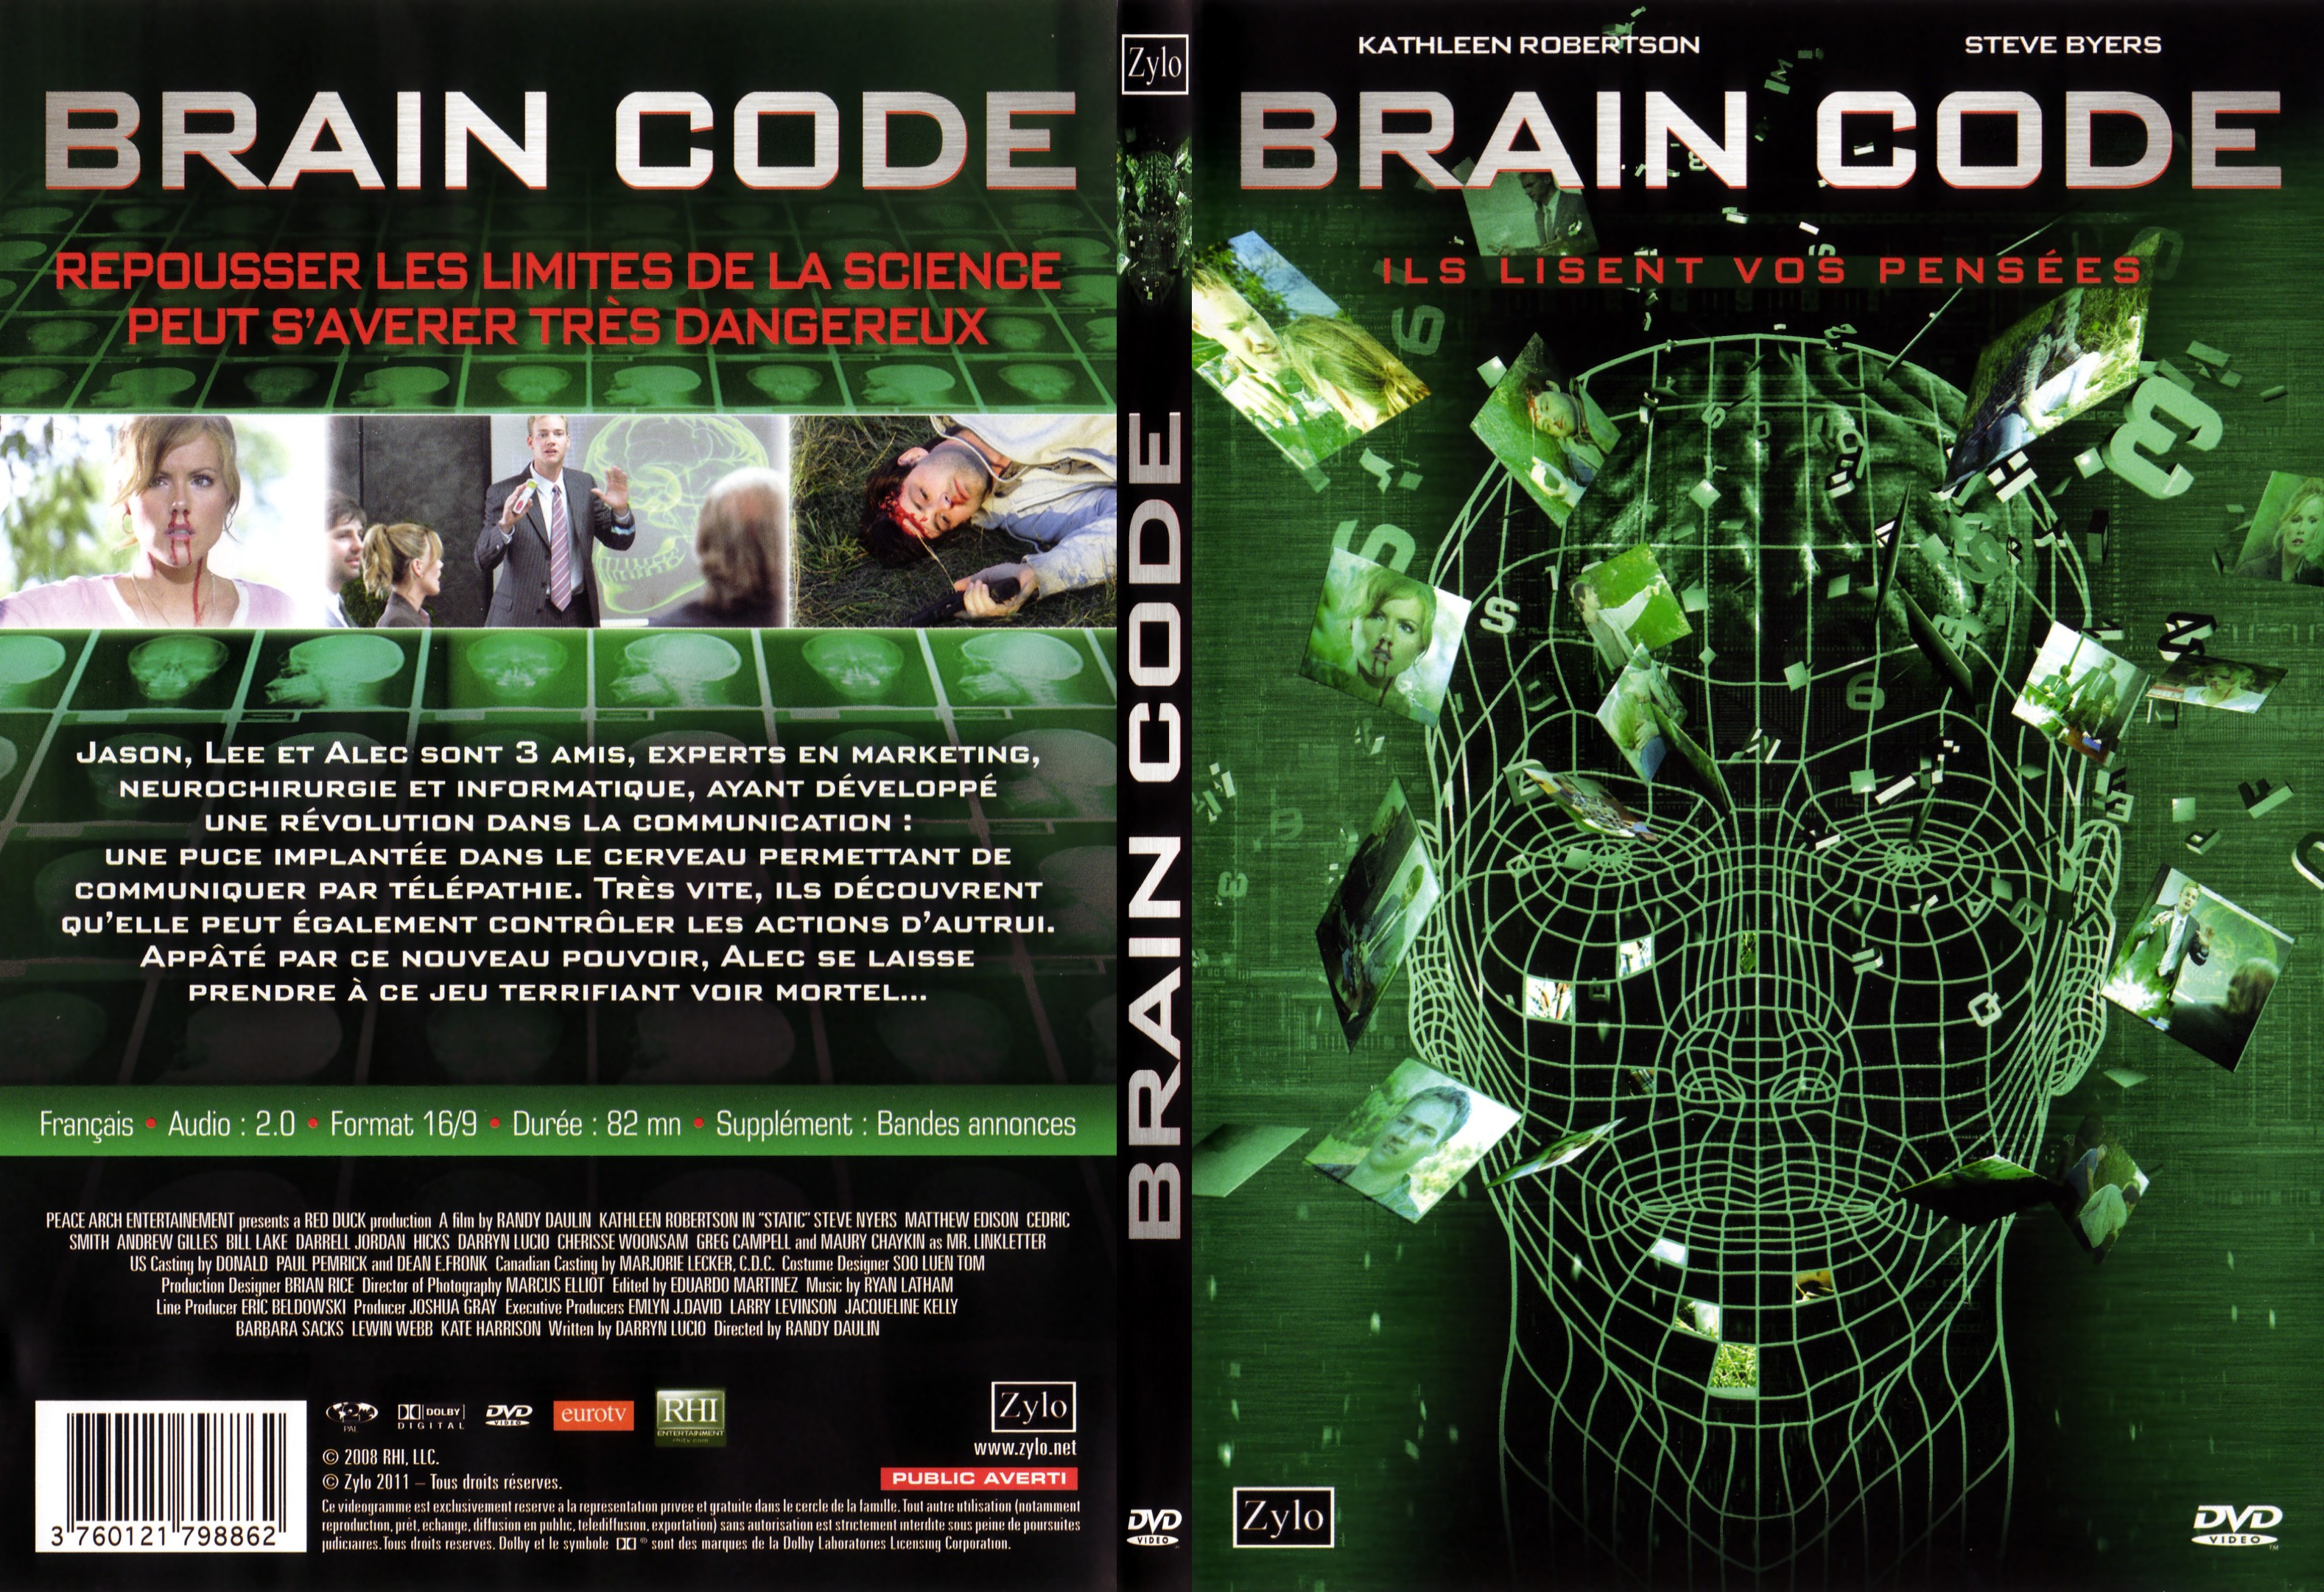 Jaquette DVD Brain code - SLIM